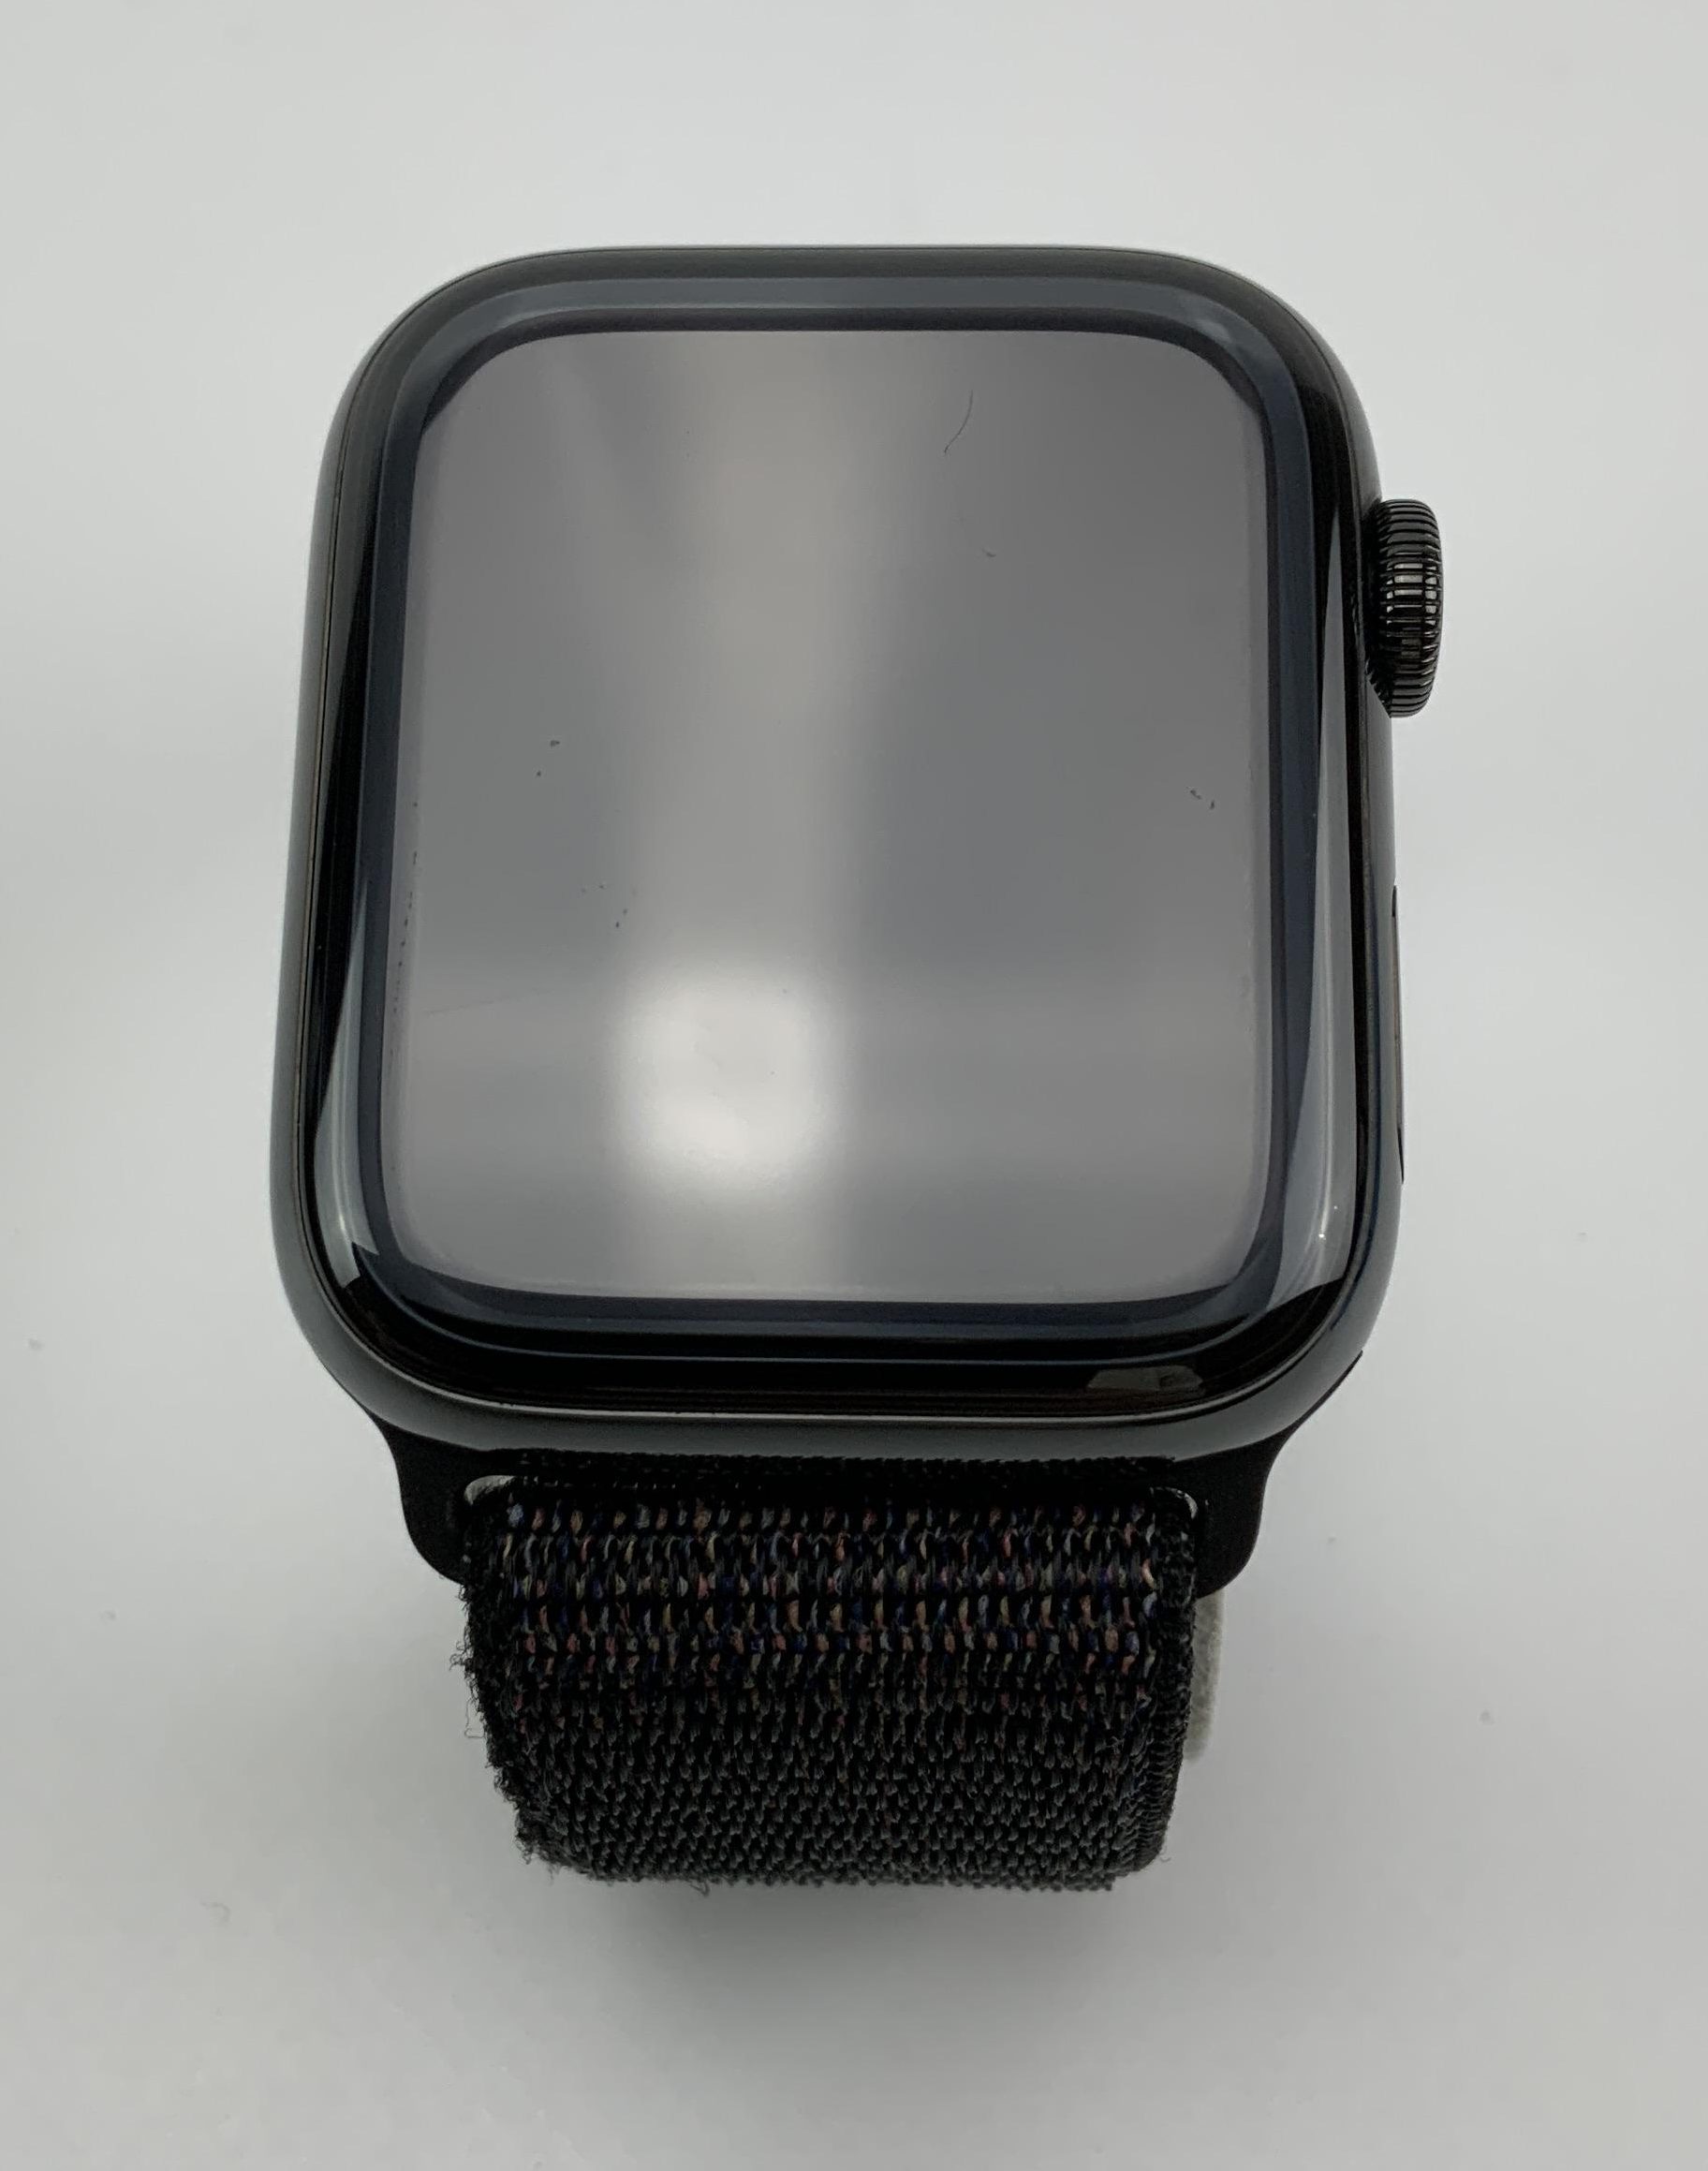 Watch Series 5 Steel Cellular (44mm), Space Black, imagen 1